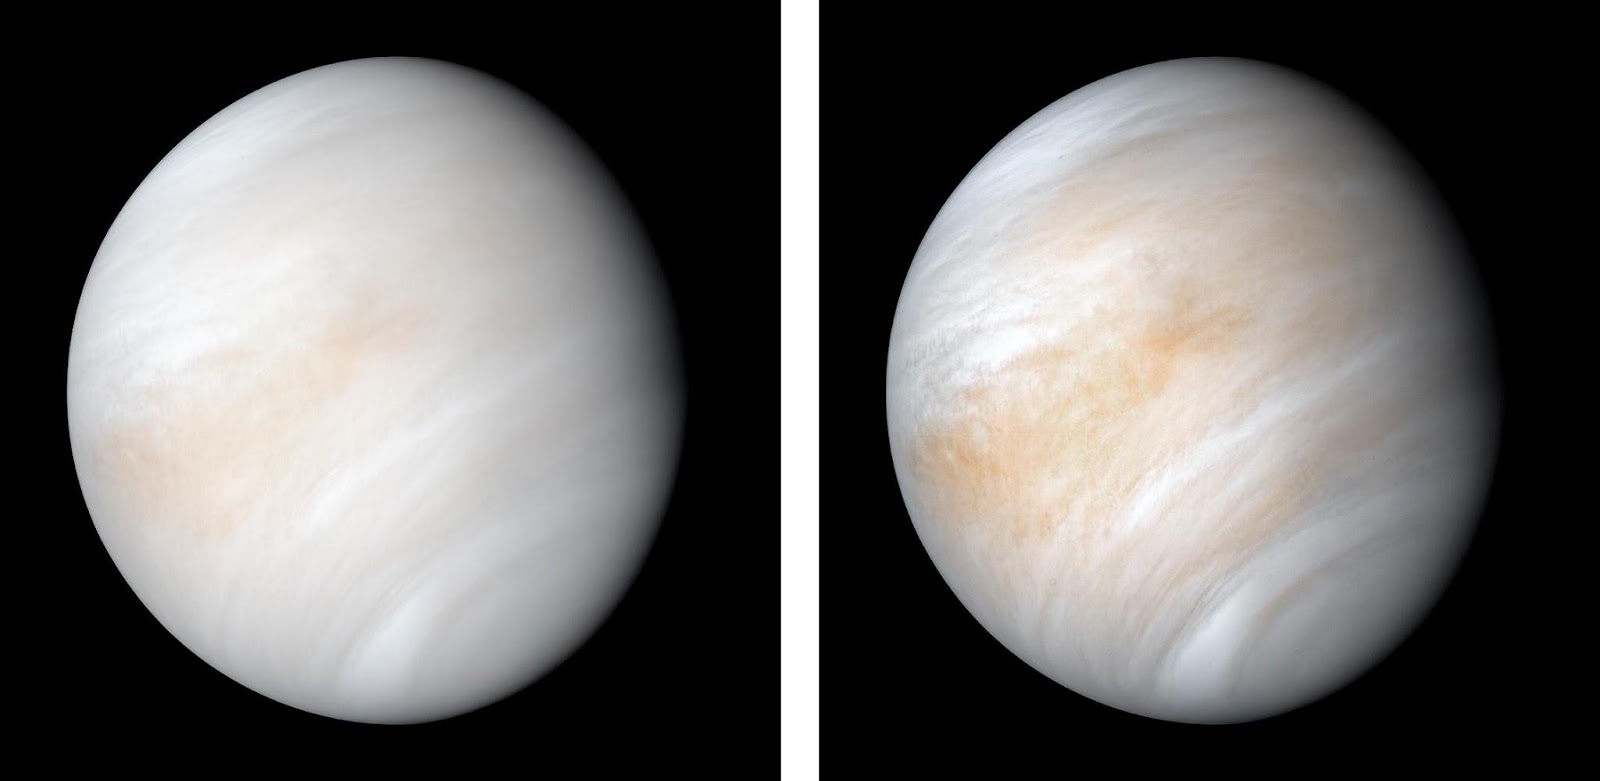 Mariner 10 images of Venus